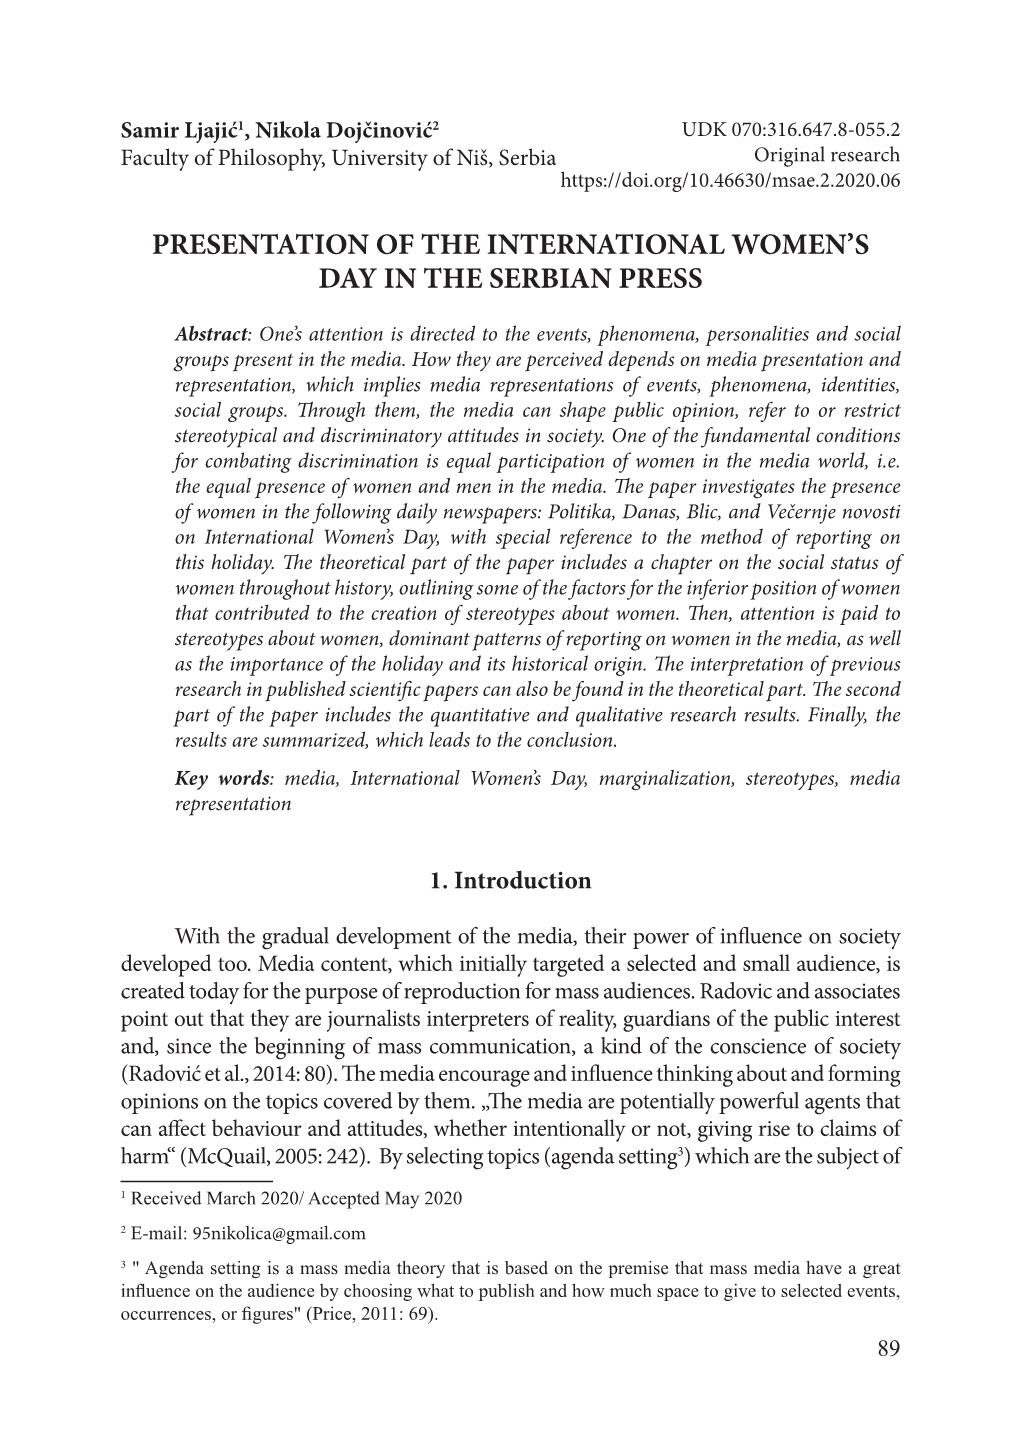 Presentation of the International Women's Day